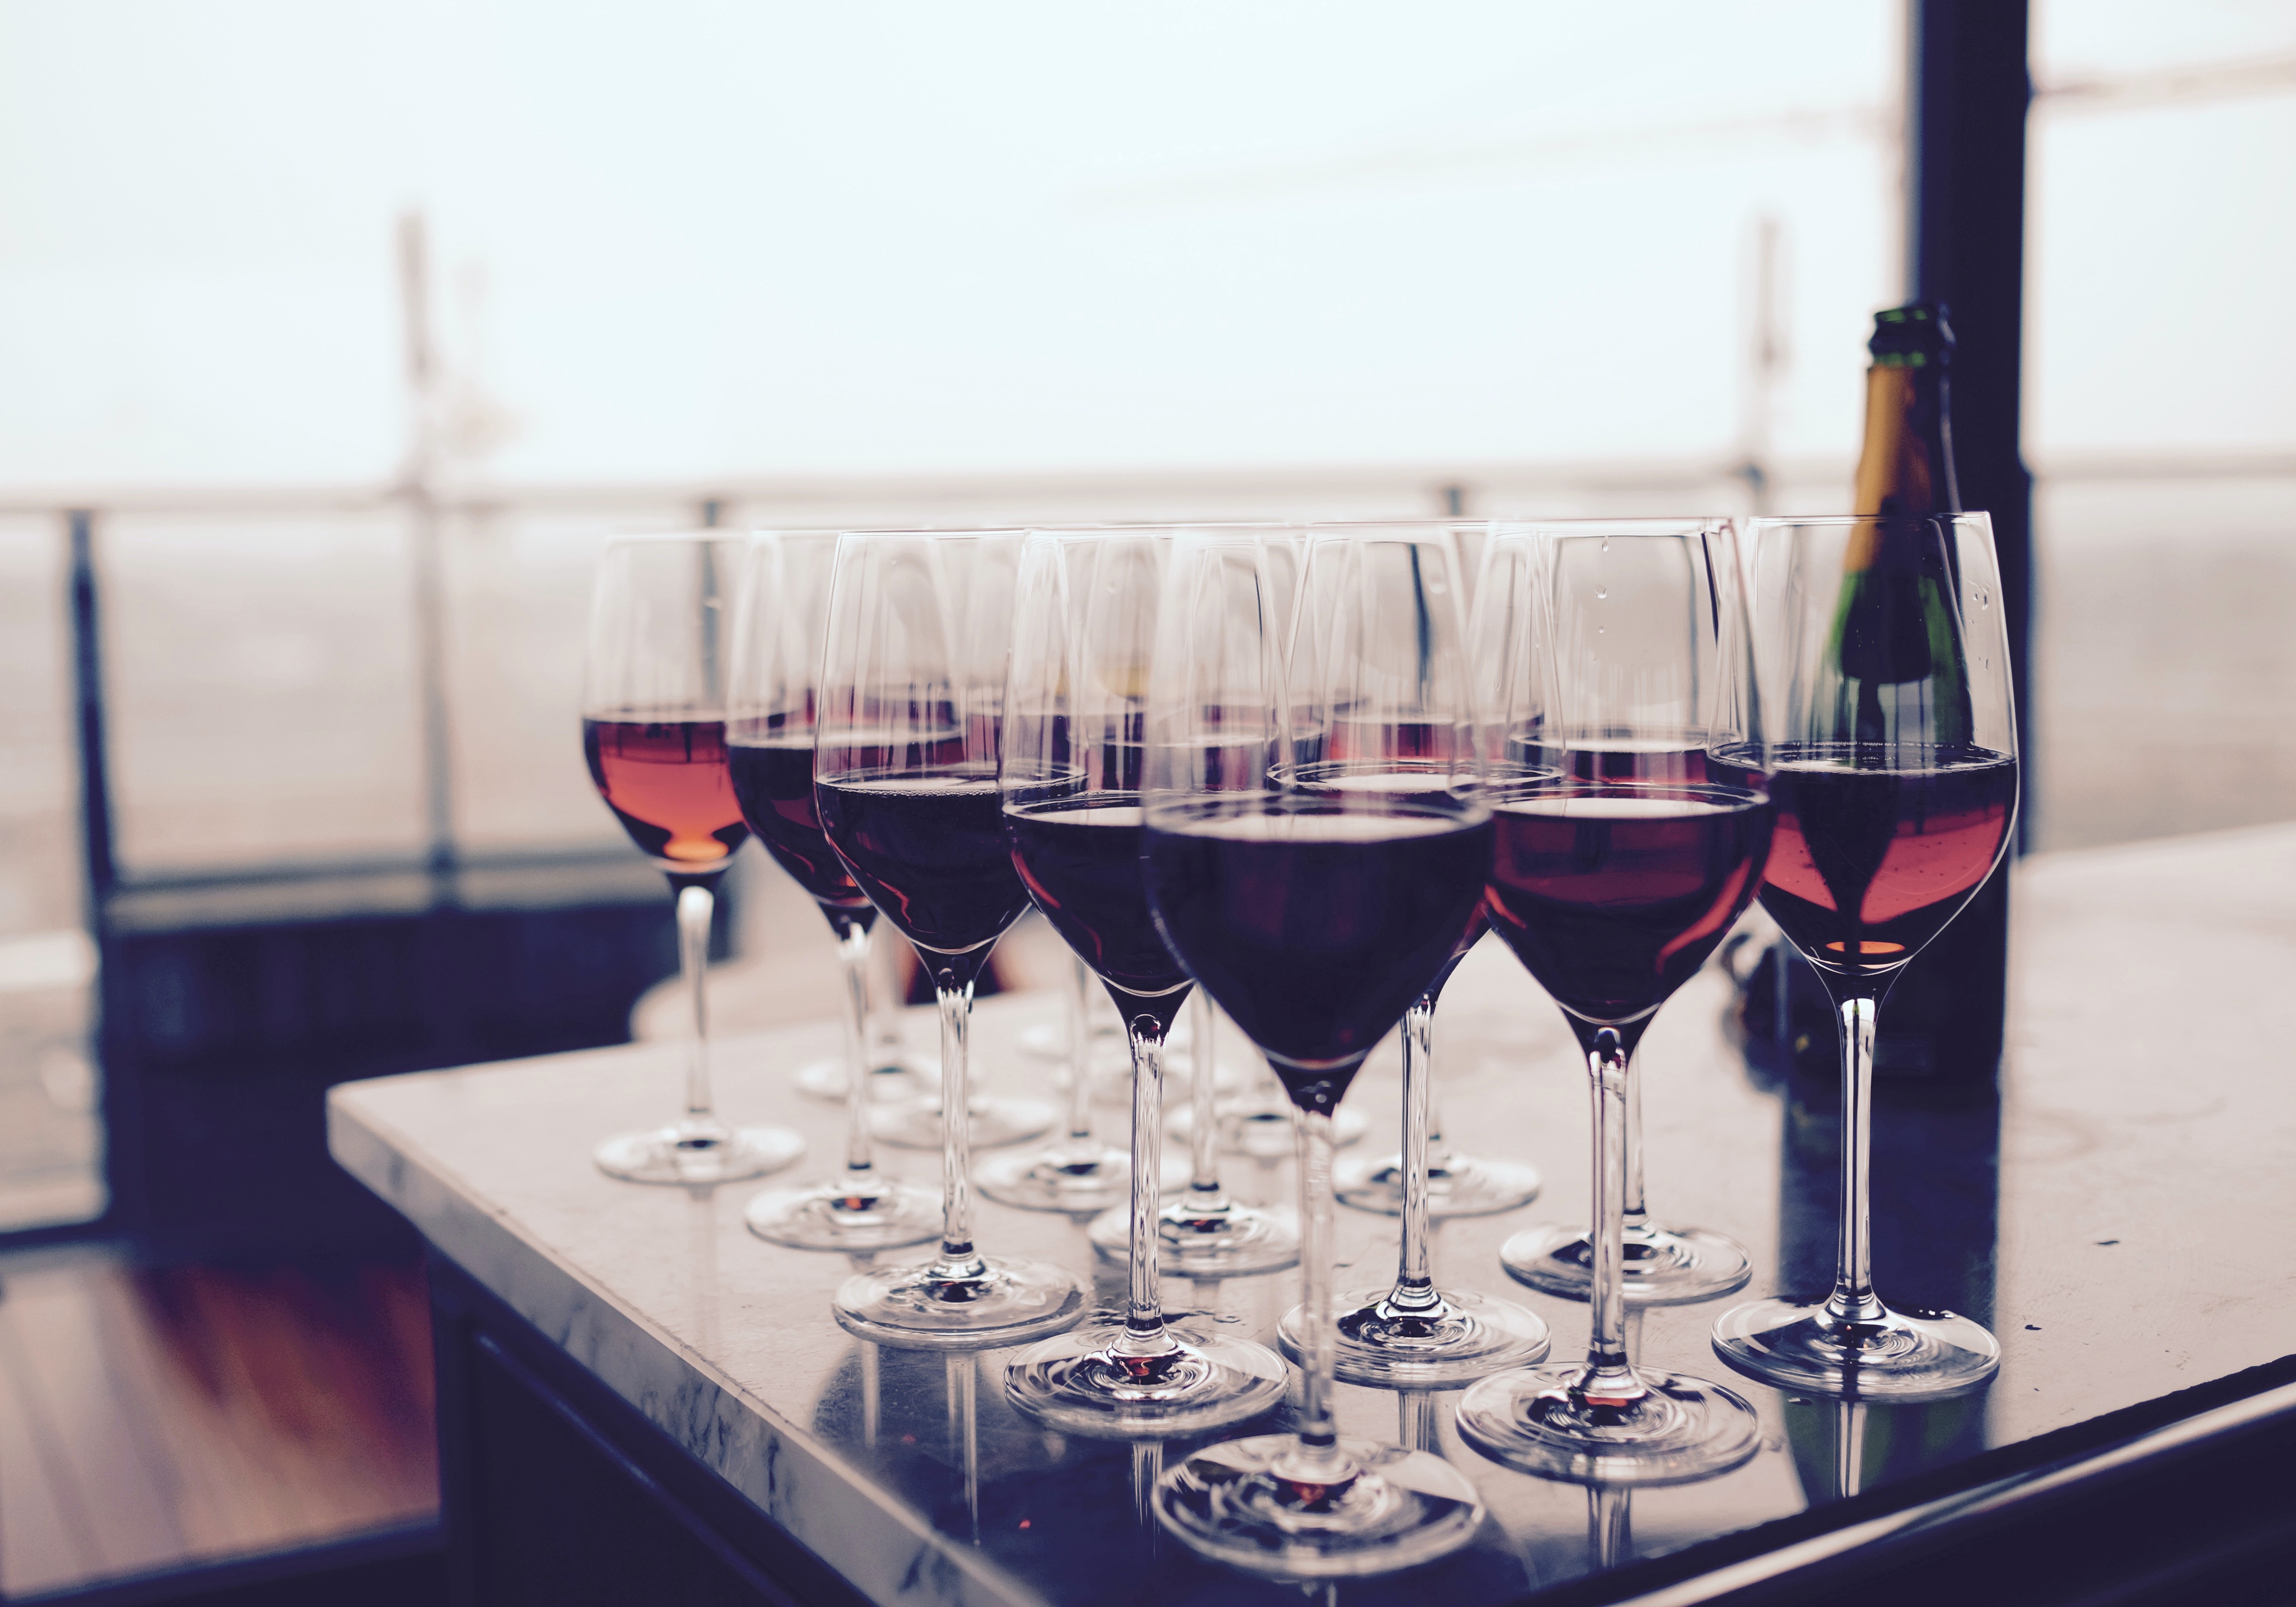 Article image - Wine glasses